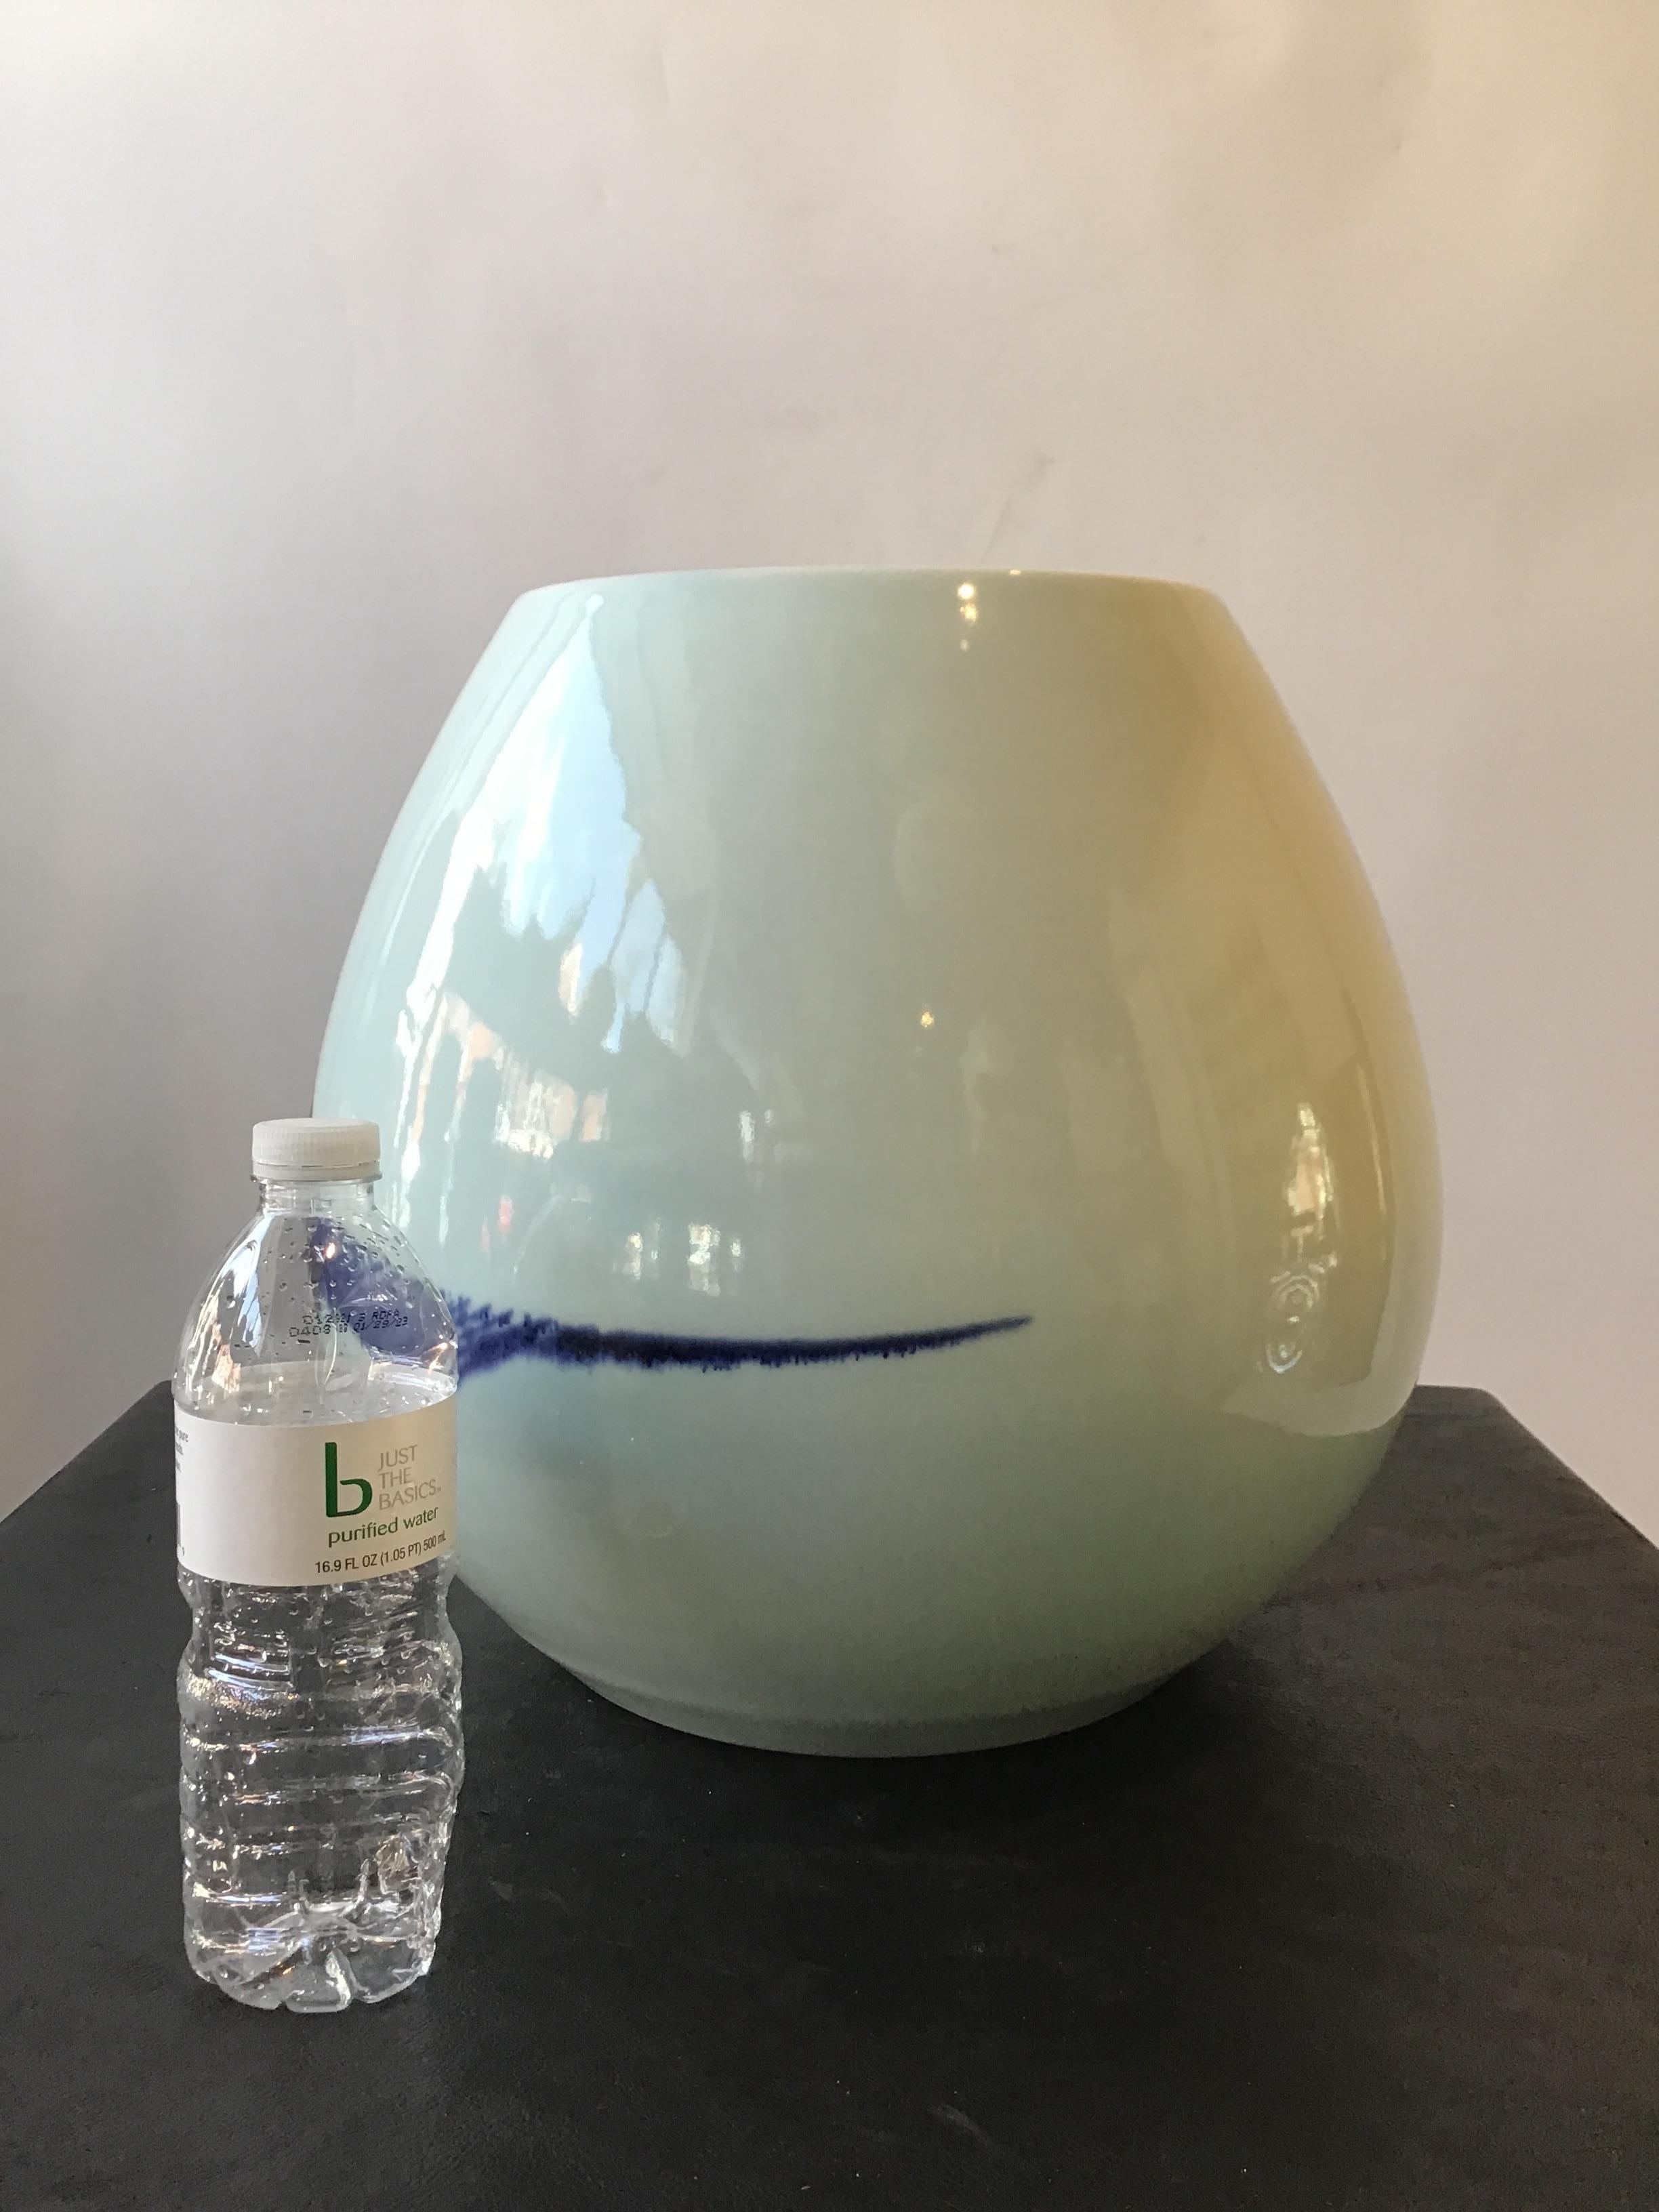 New, large spin ceramics vase.